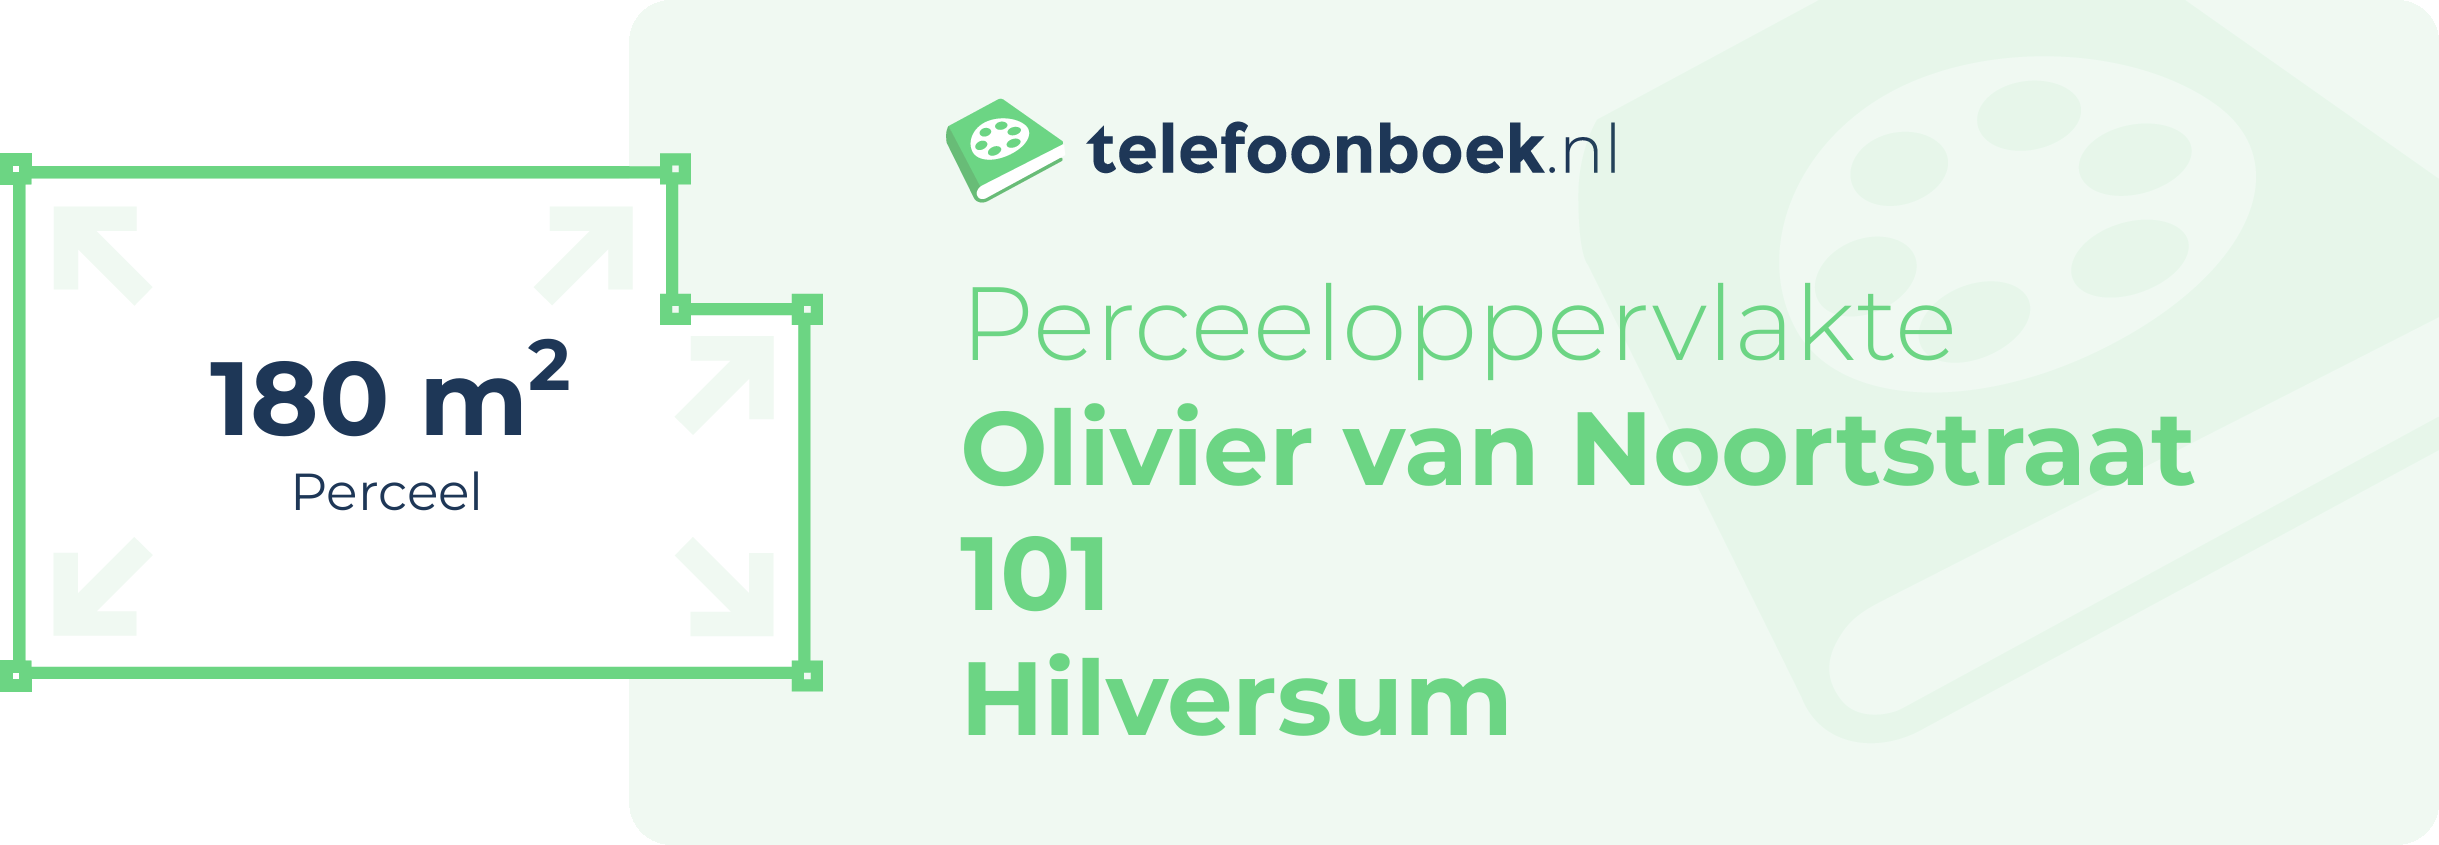 Perceeloppervlakte Olivier Van Noortstraat 101 Hilversum